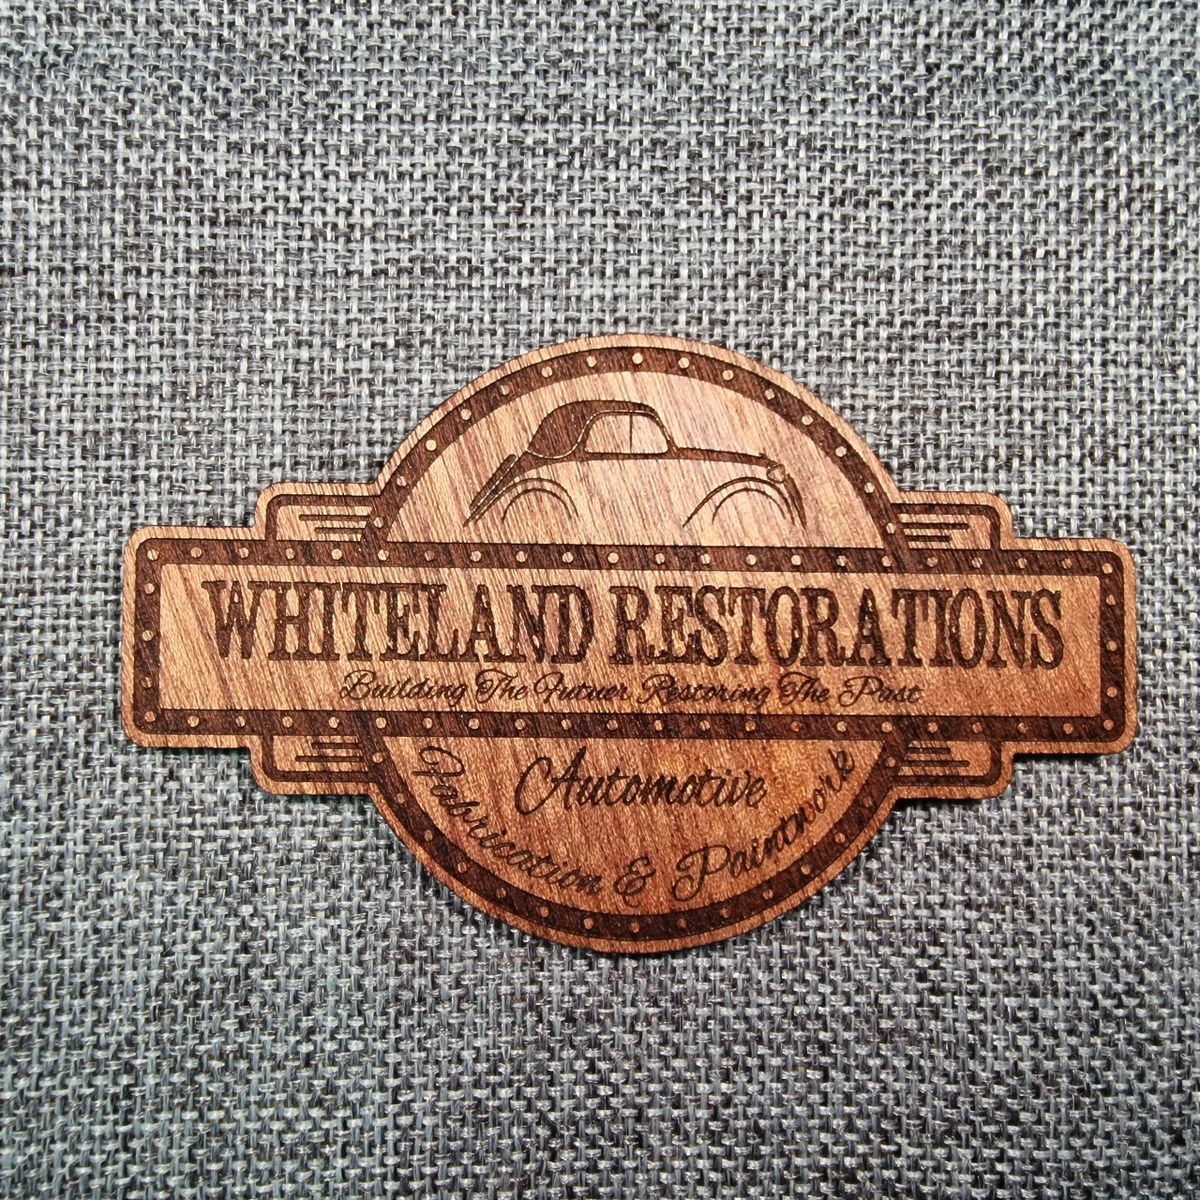 Whiteland Restorations Signiture Fridge Magnet